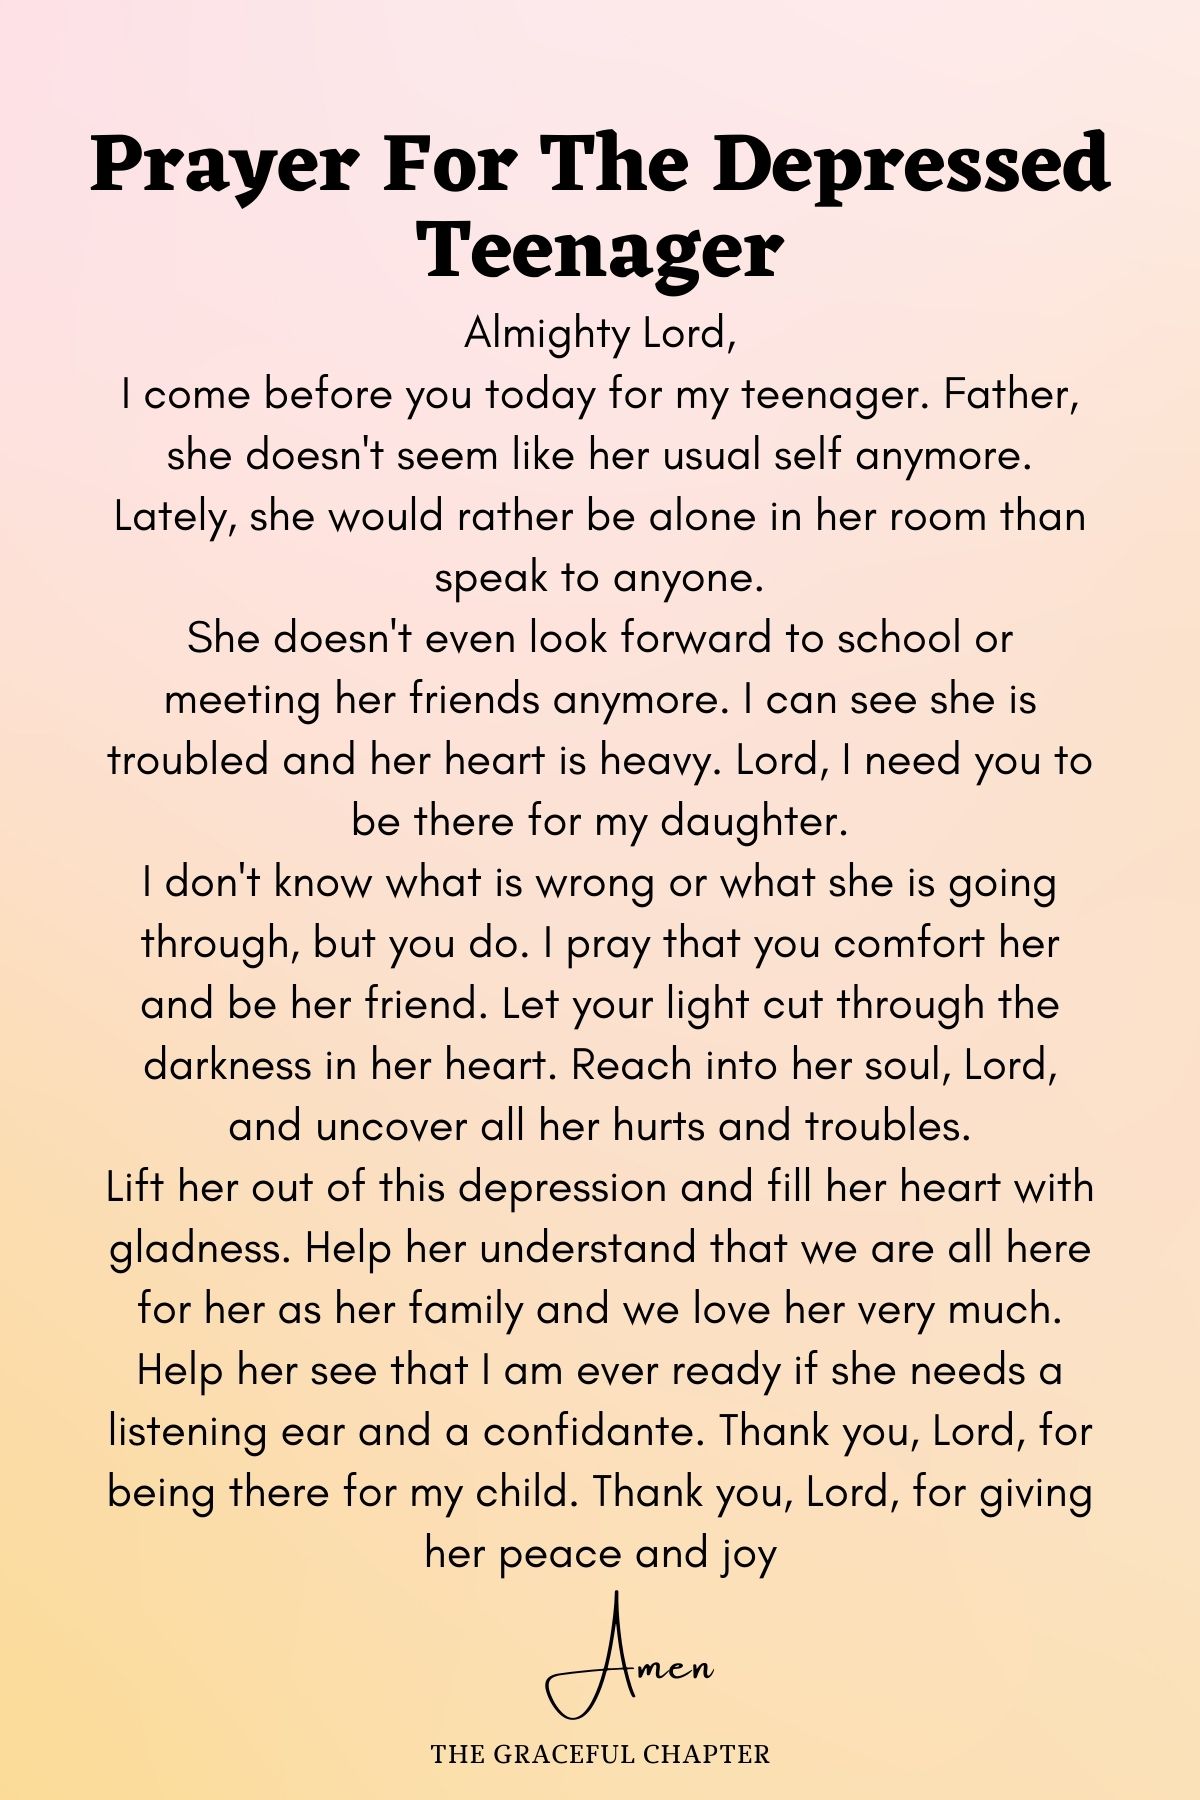 Prayer for the depressed teenager